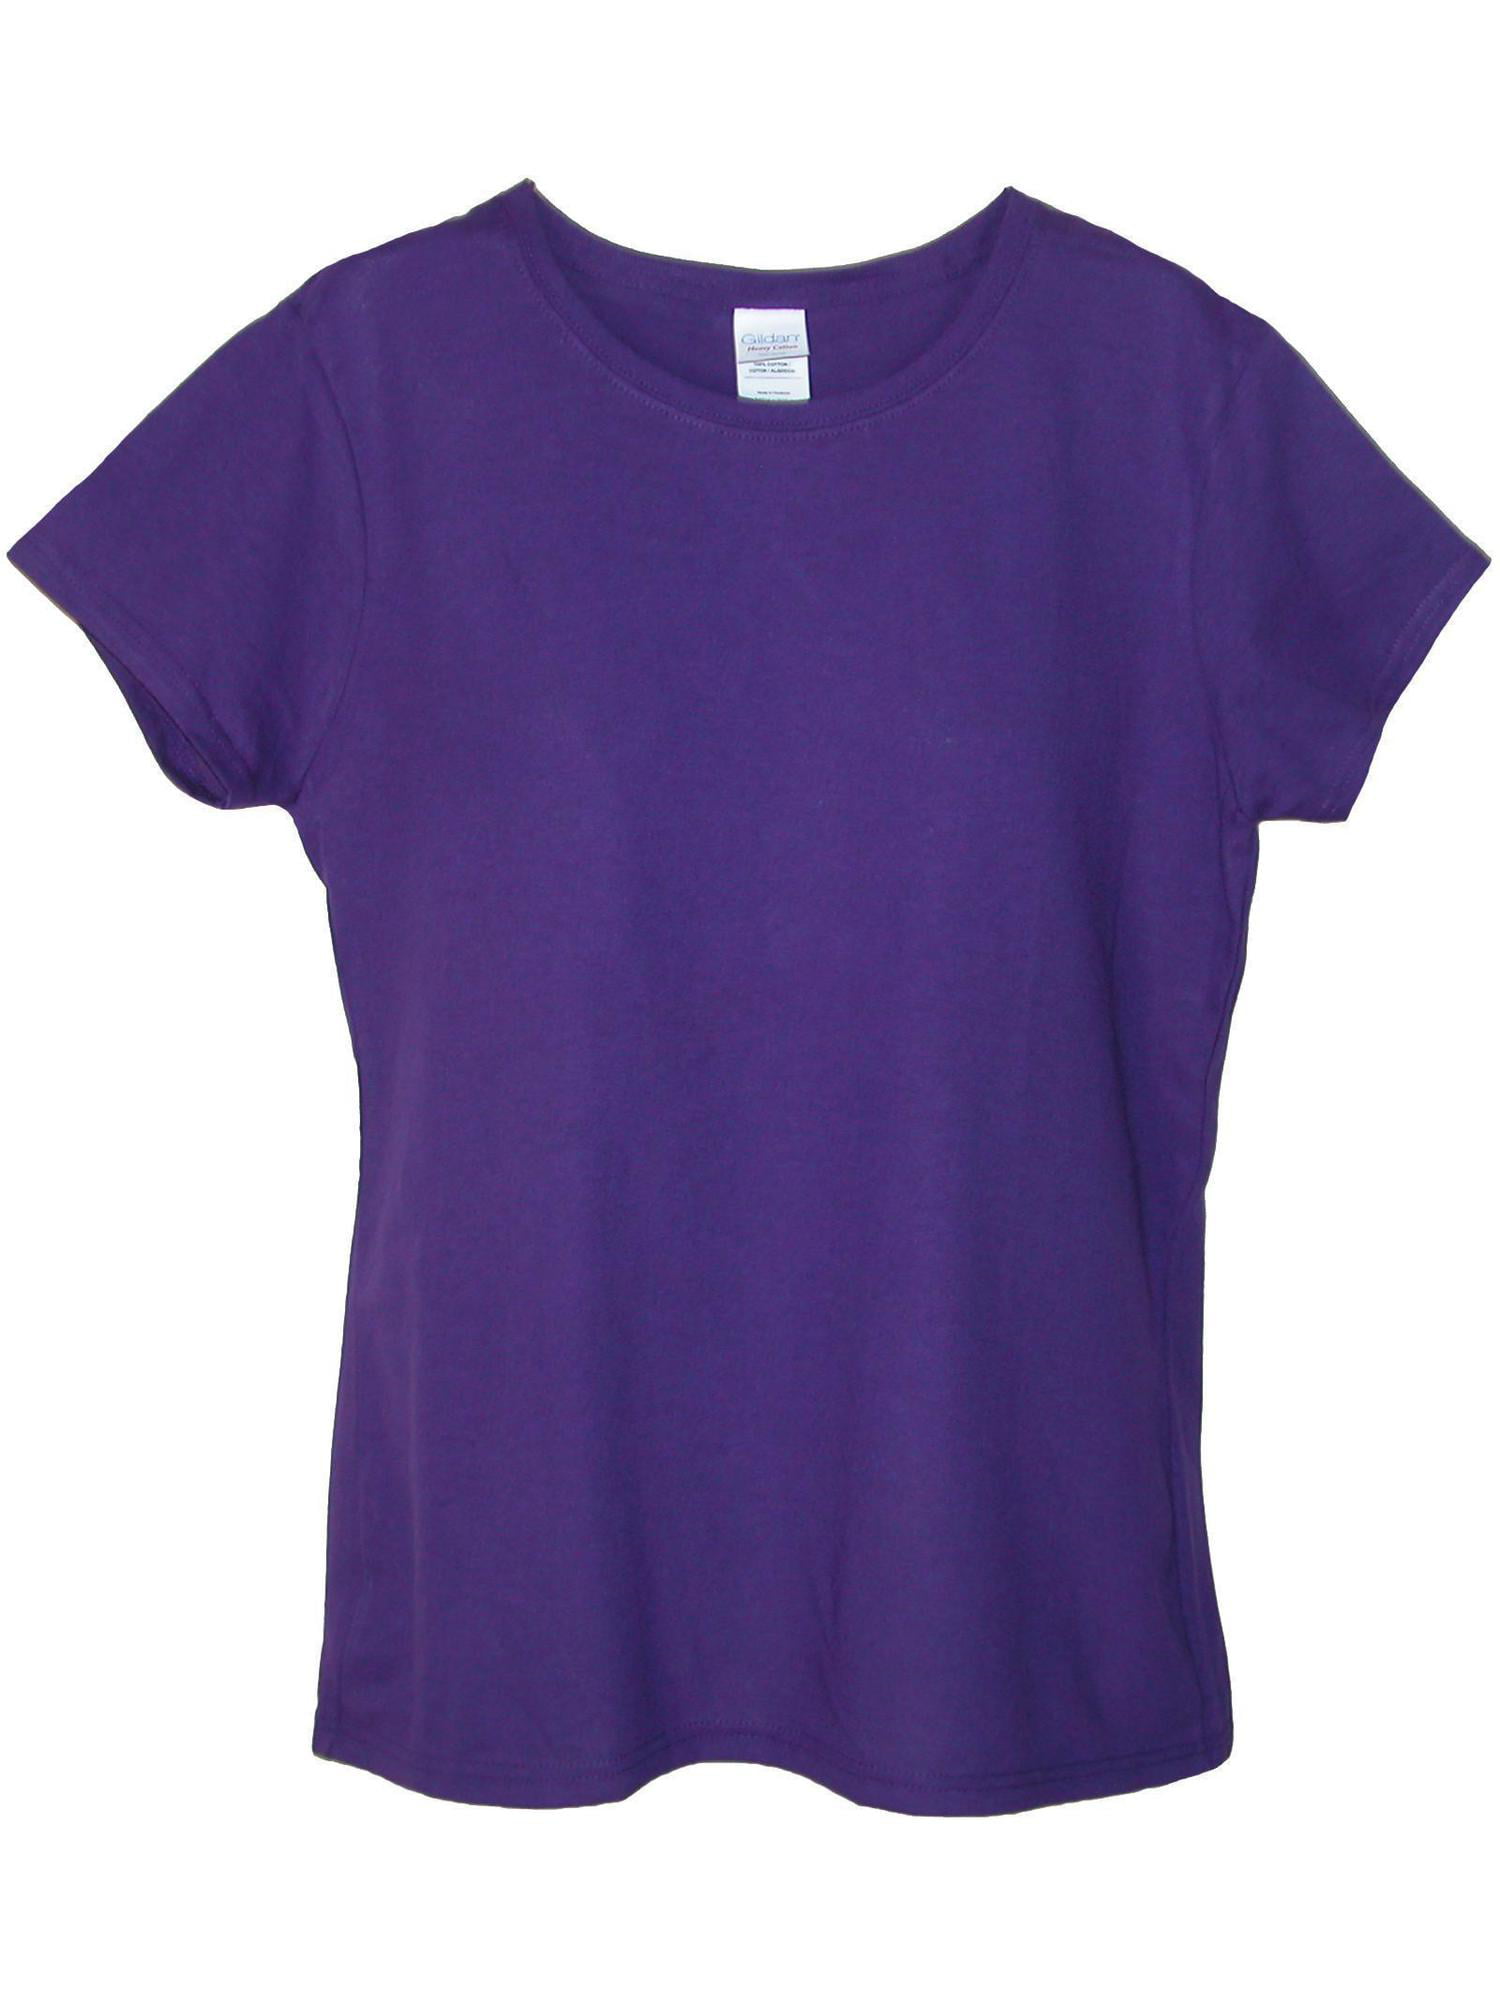 Gildan Ladies tee Premium Cotton T-Shirt tshirt women's round neck brand new 